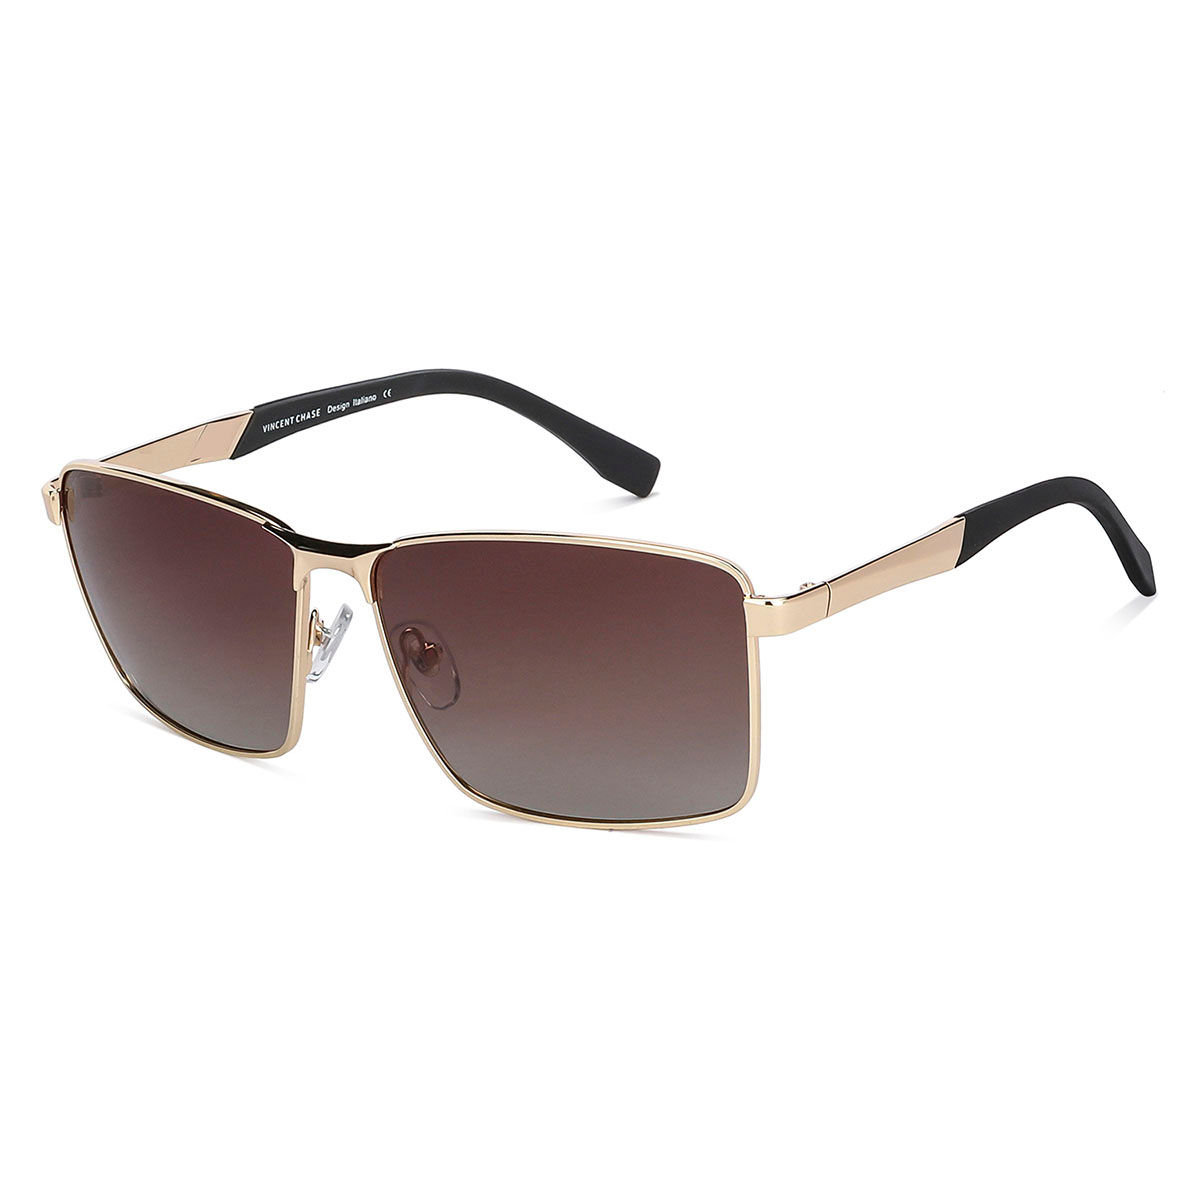 Buy Gera Opticals Full Rim Latest and Stylish Sunglasses | Polarized and  100% UV Protected | Men & Women at Amazon.in